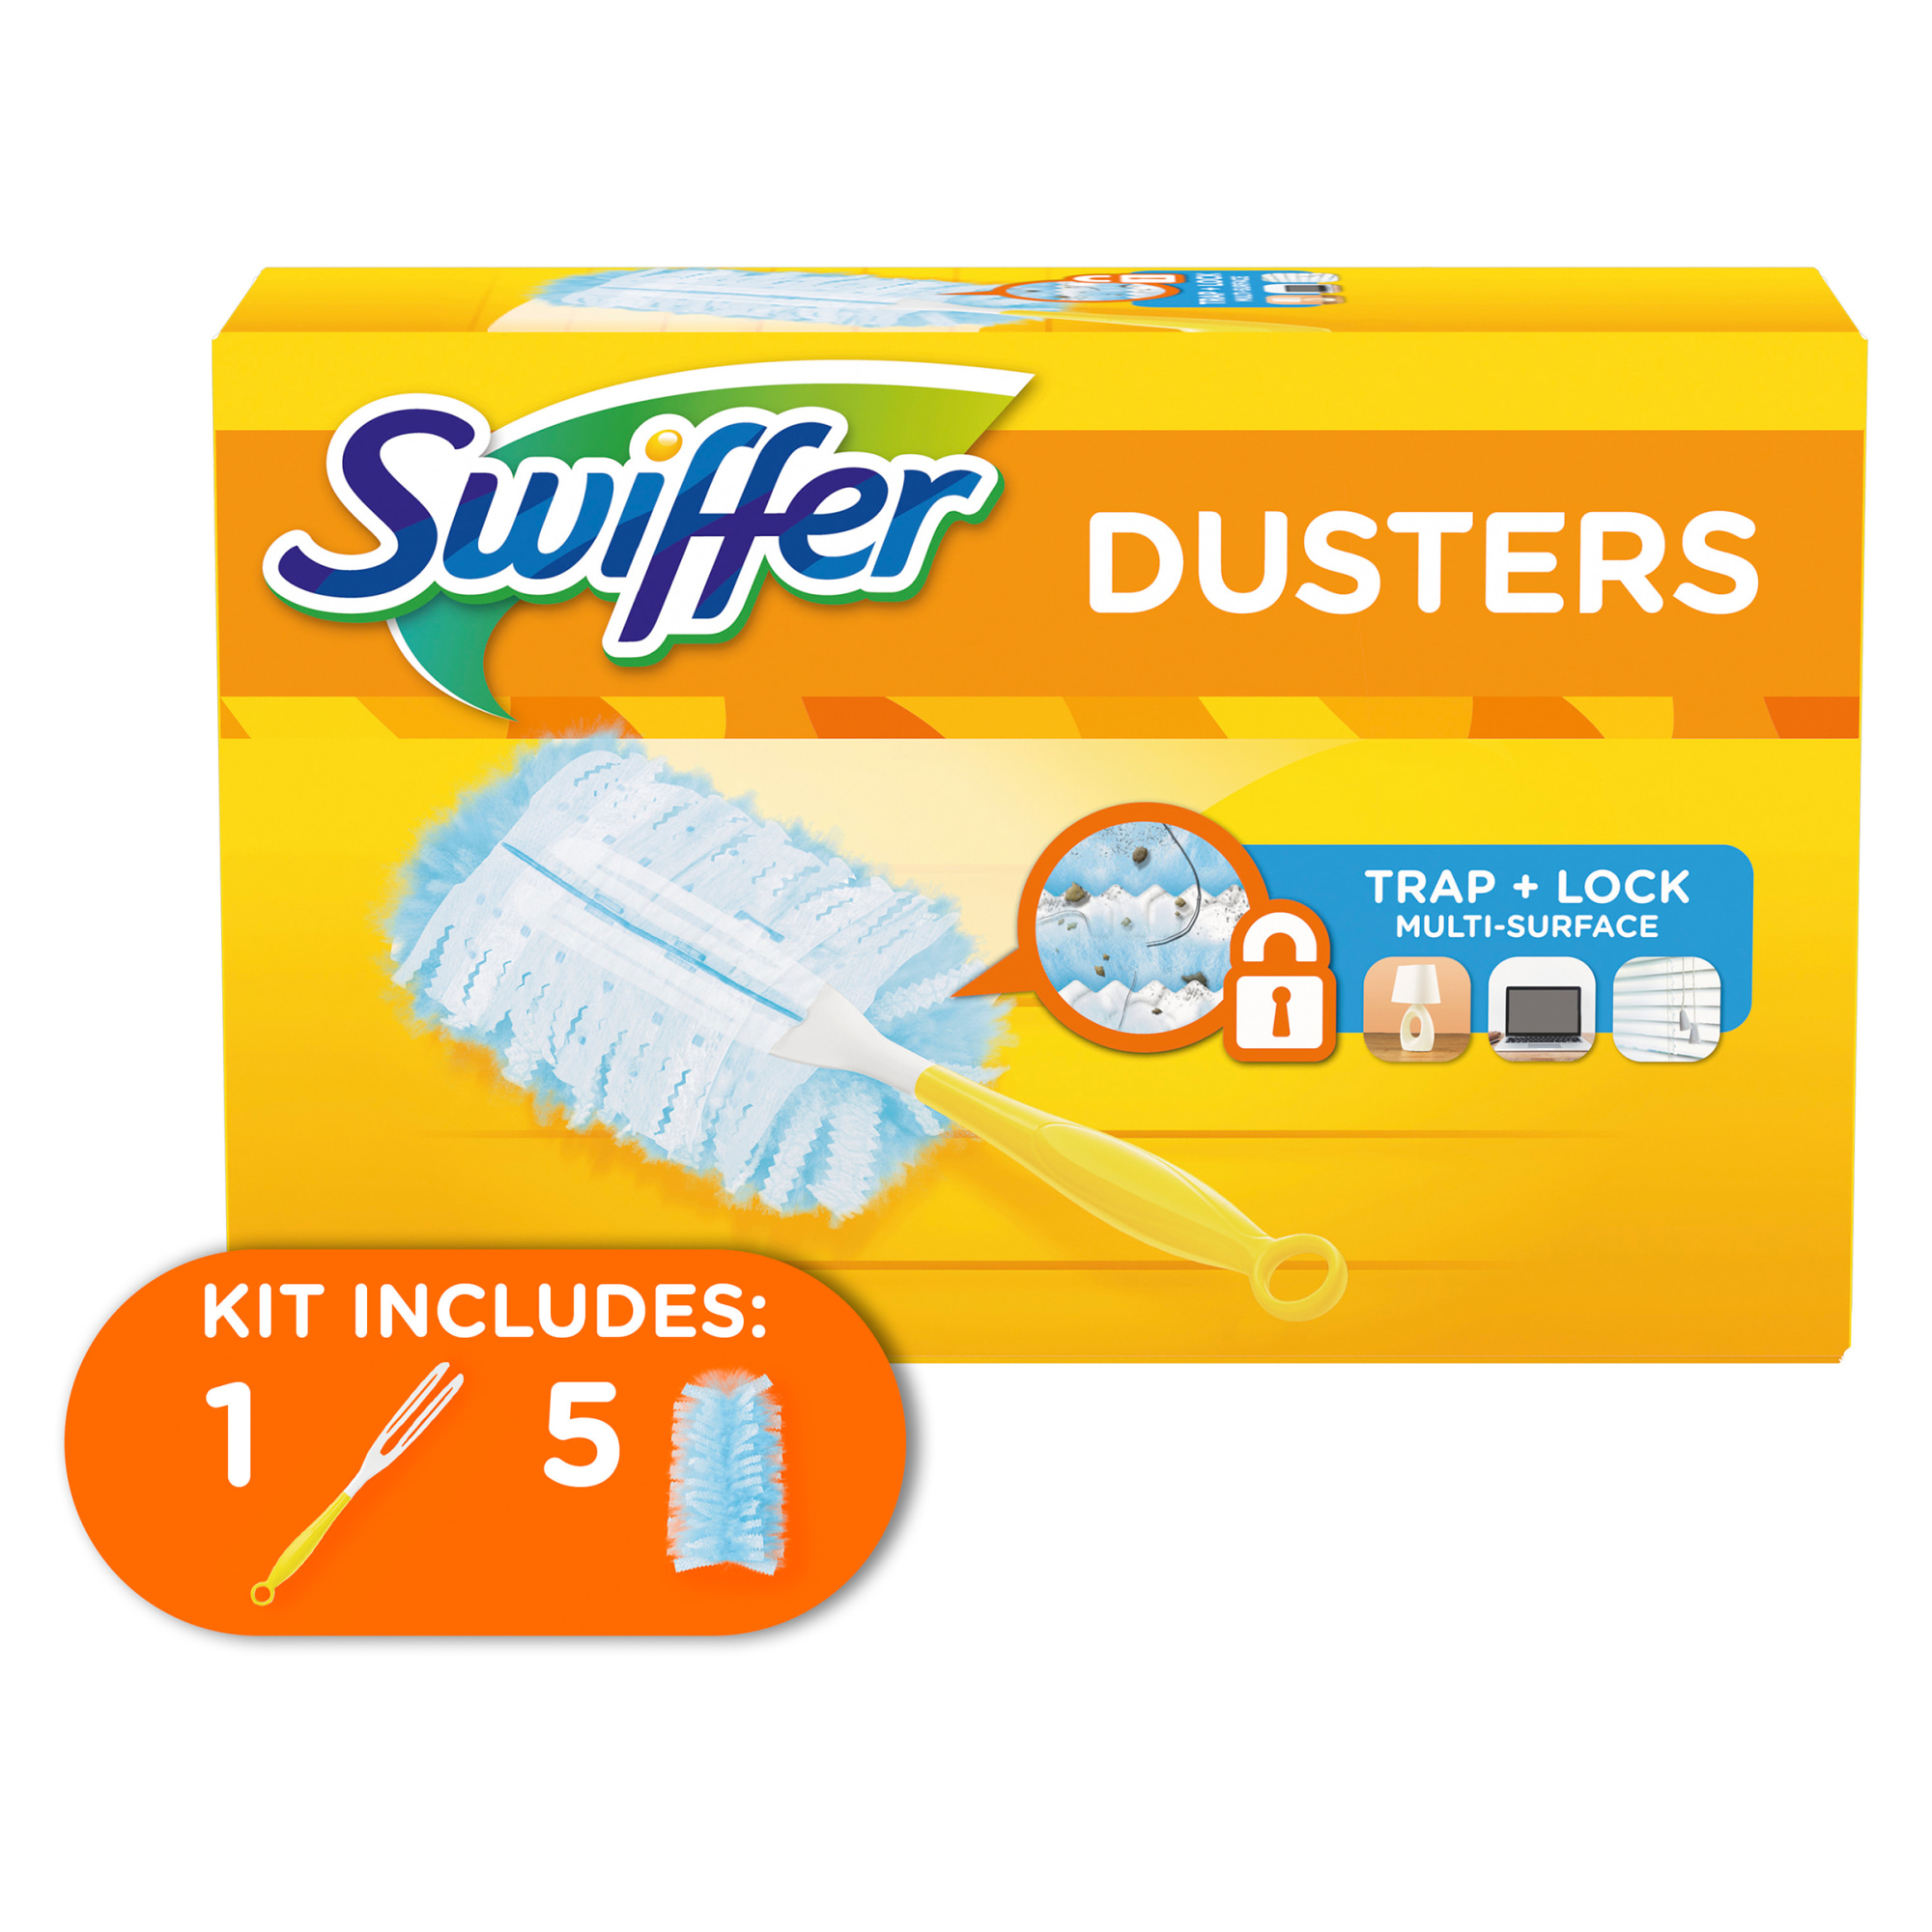 Swiffer Duster Short Handle Starter Kit (1 Handle, 5 Dusters) - image 7 of 13